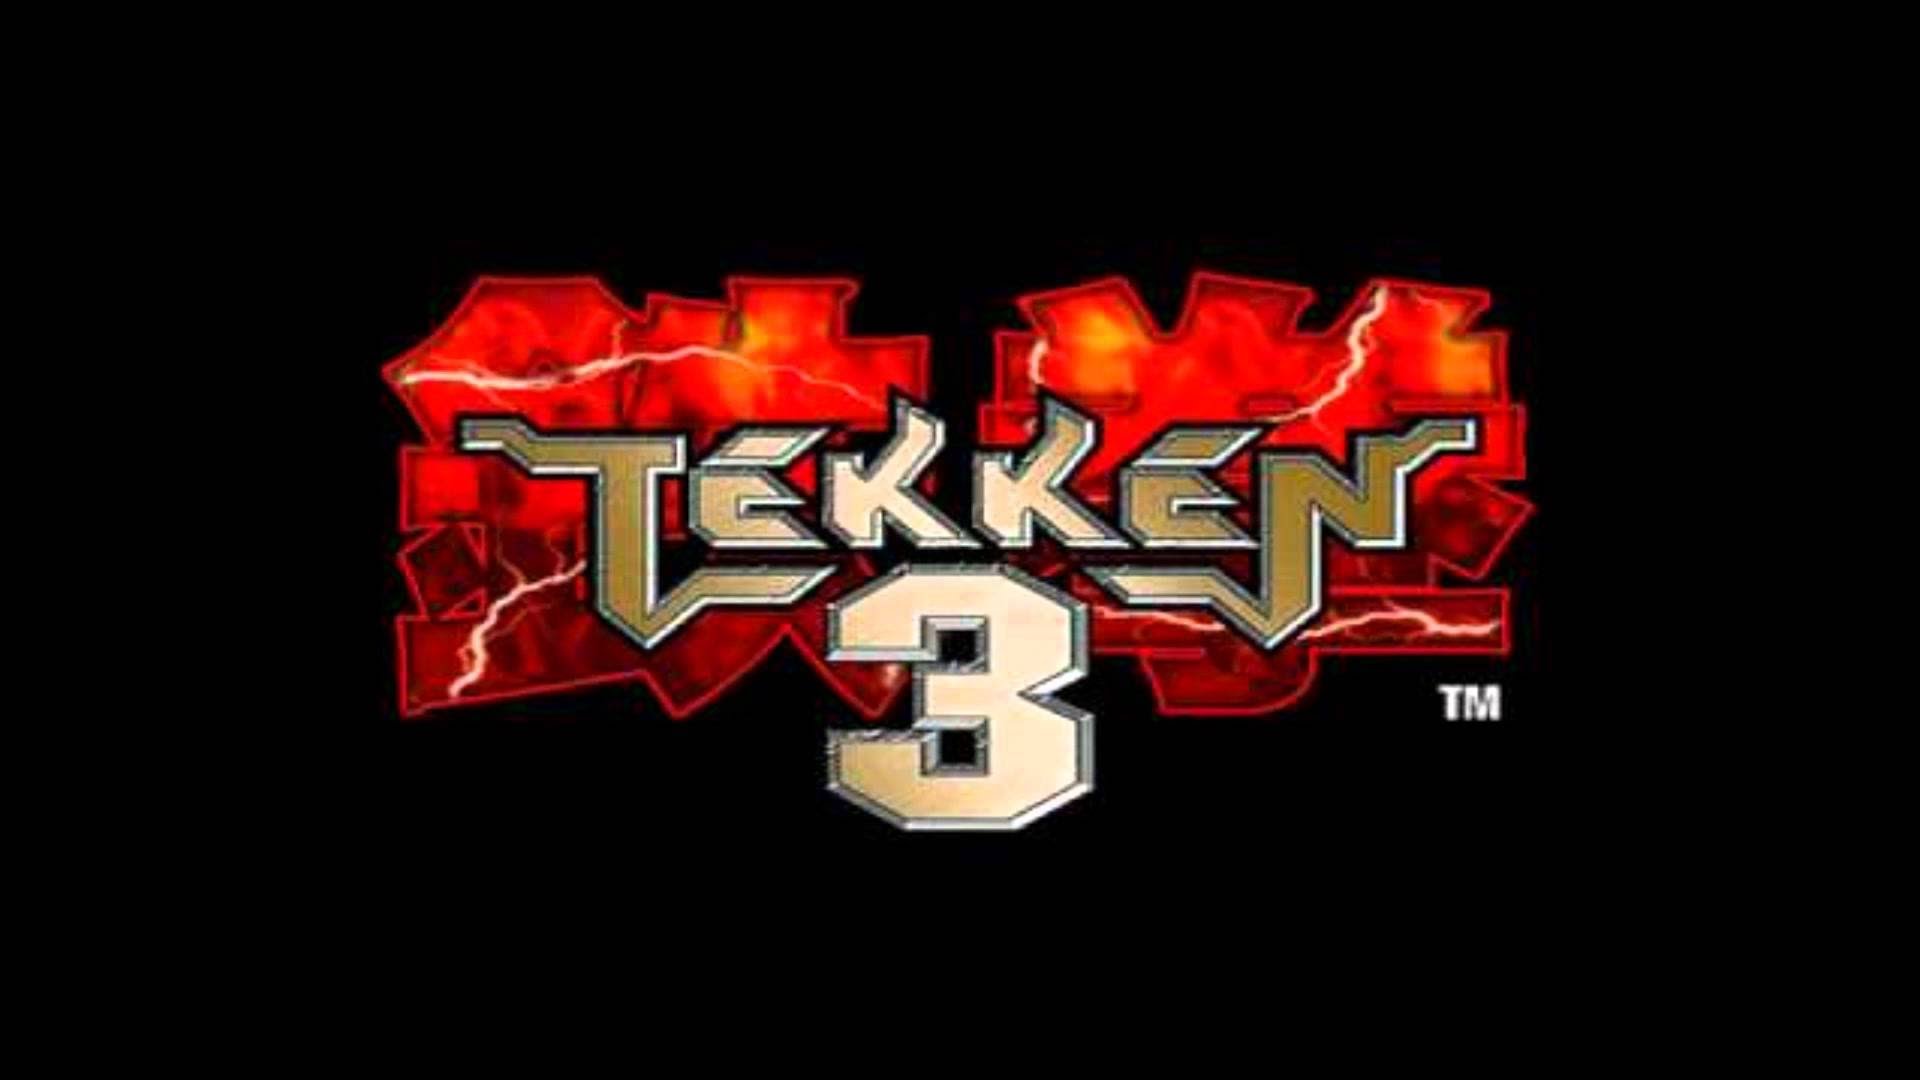 Tekken: 3 Full Game for PC Free Download 100% Working | M.D.C ...